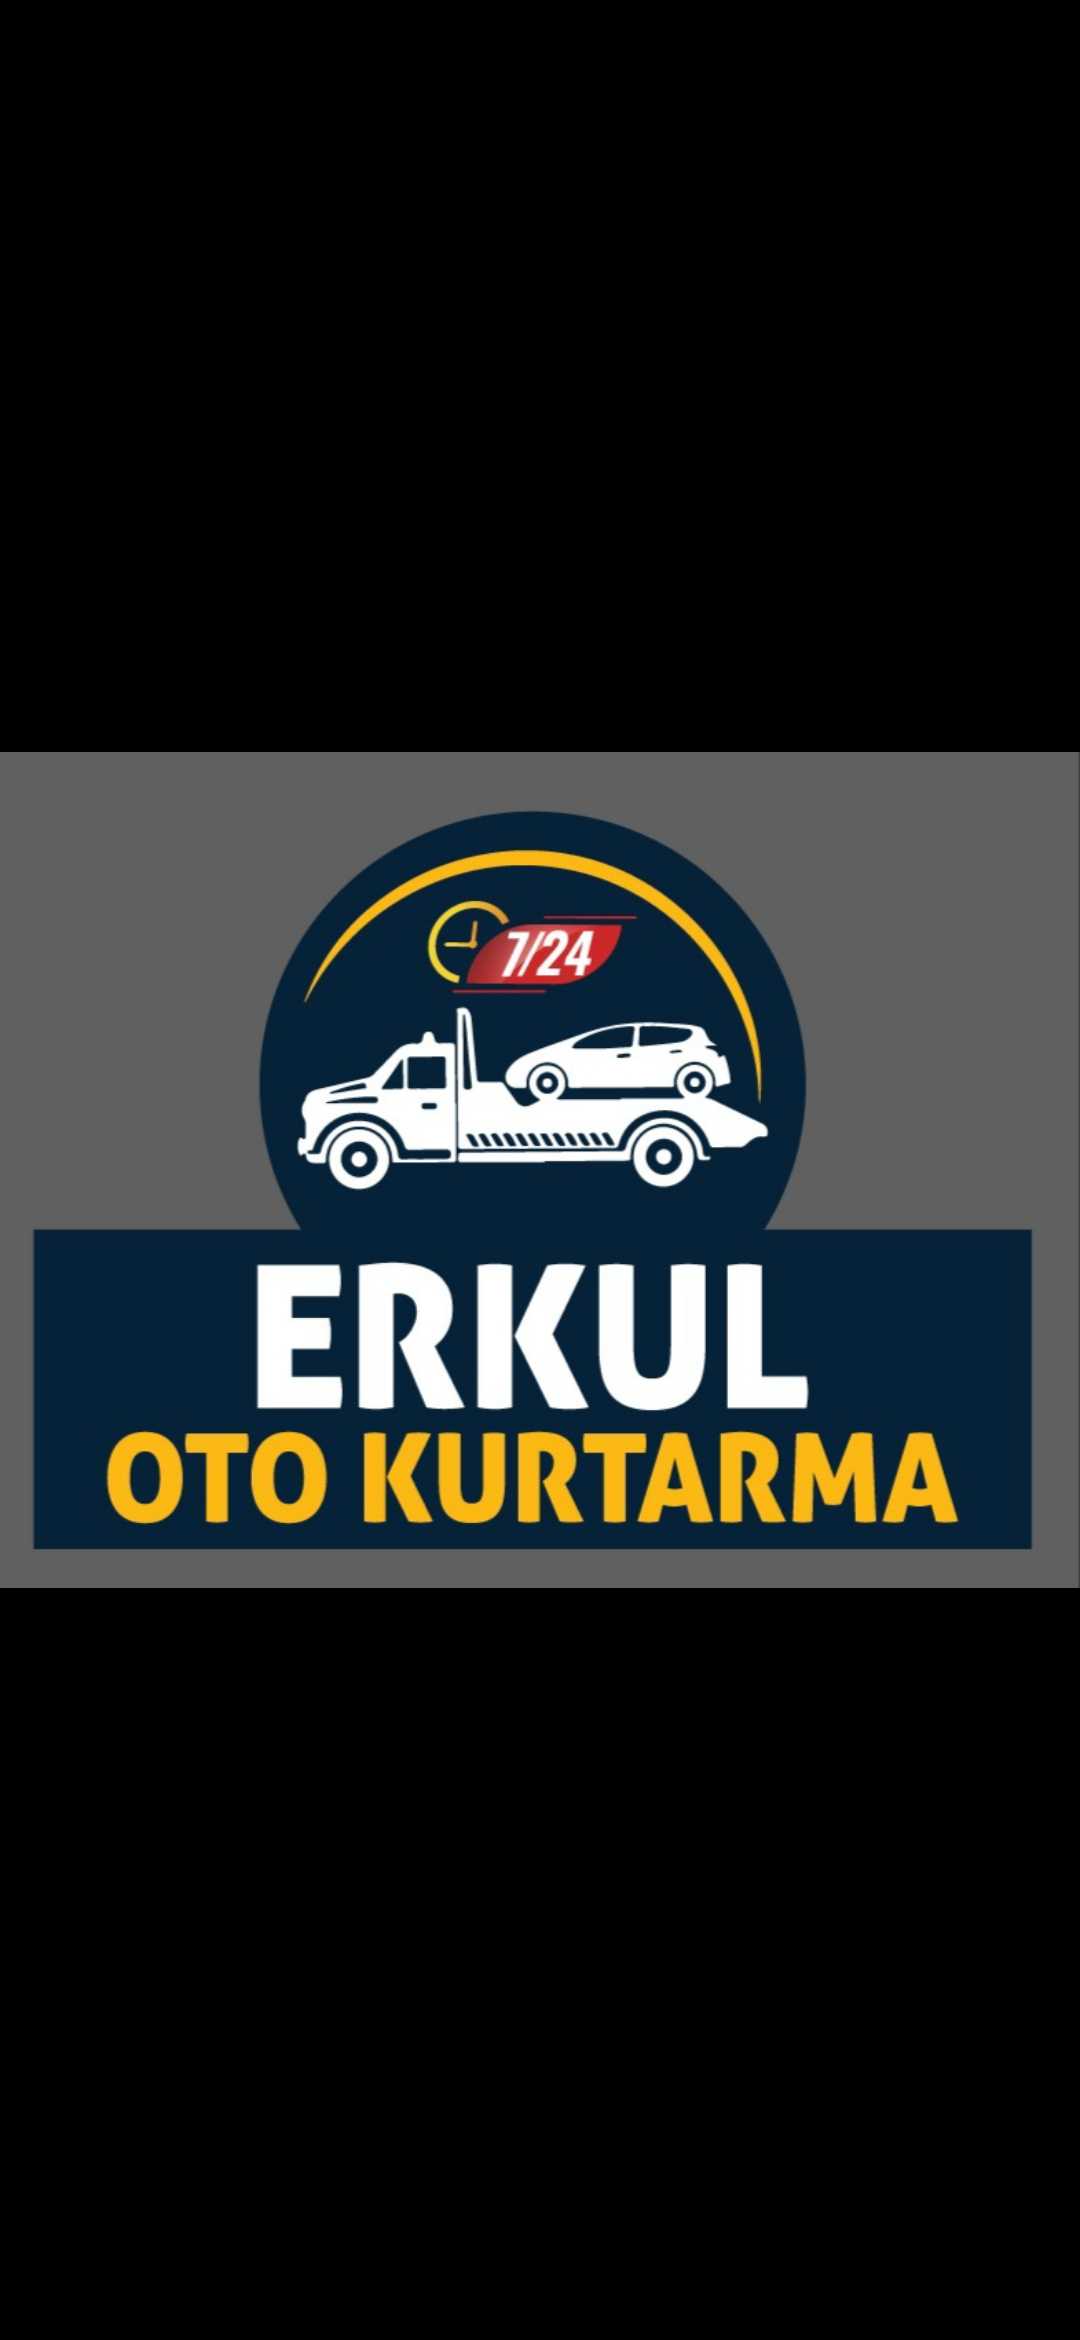 Erkul Oto Kurtarma Logo